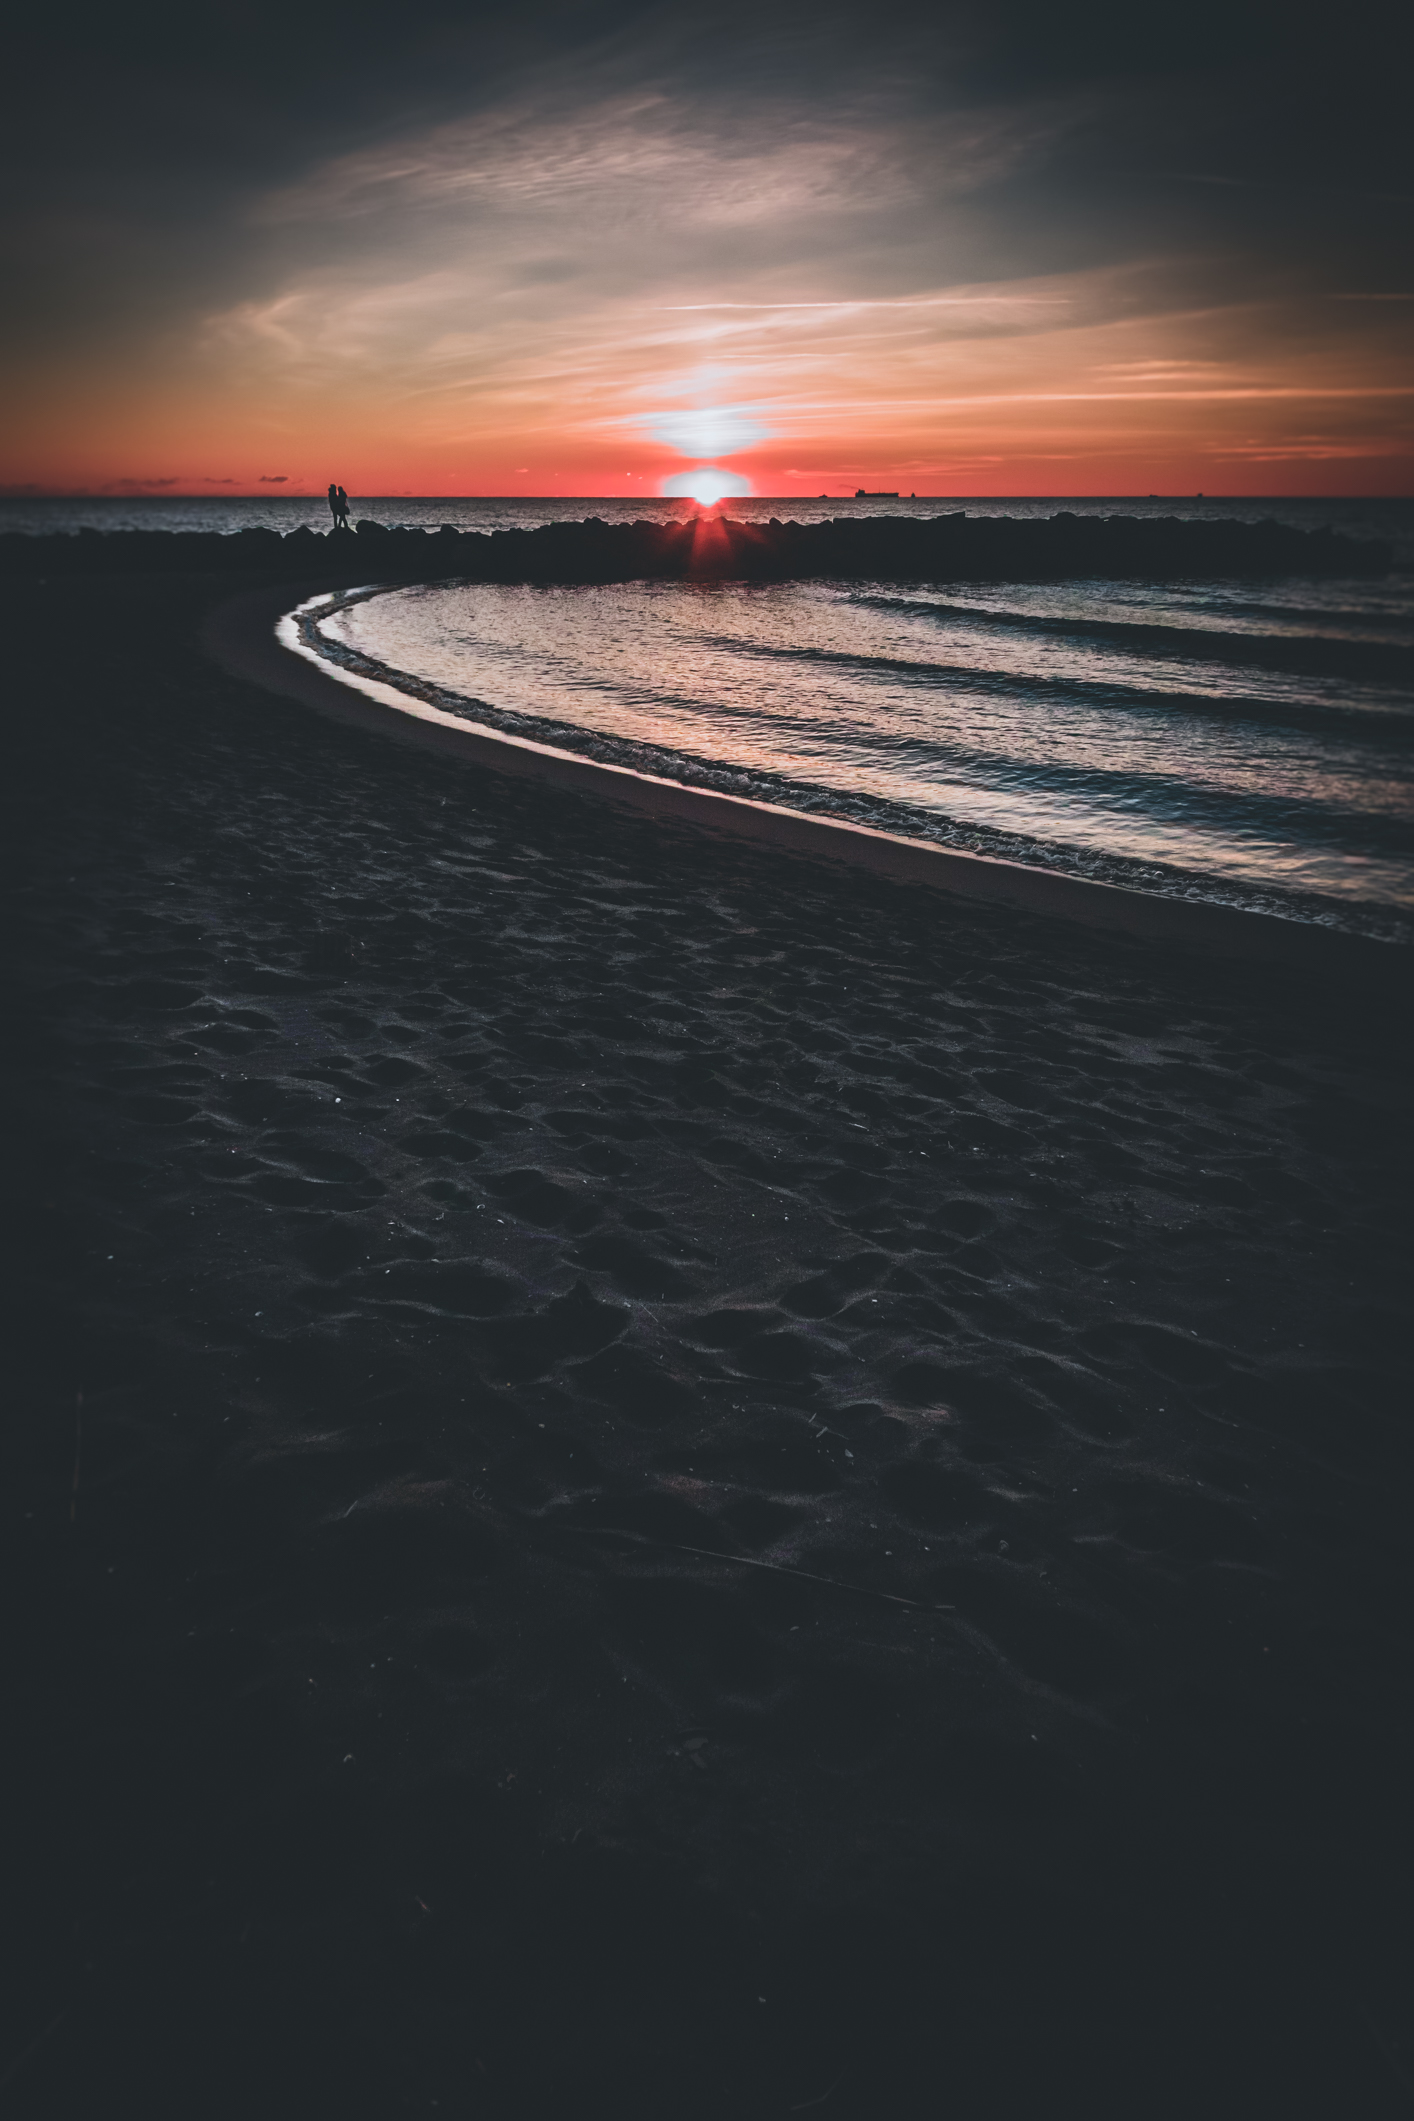 A simple sunset...